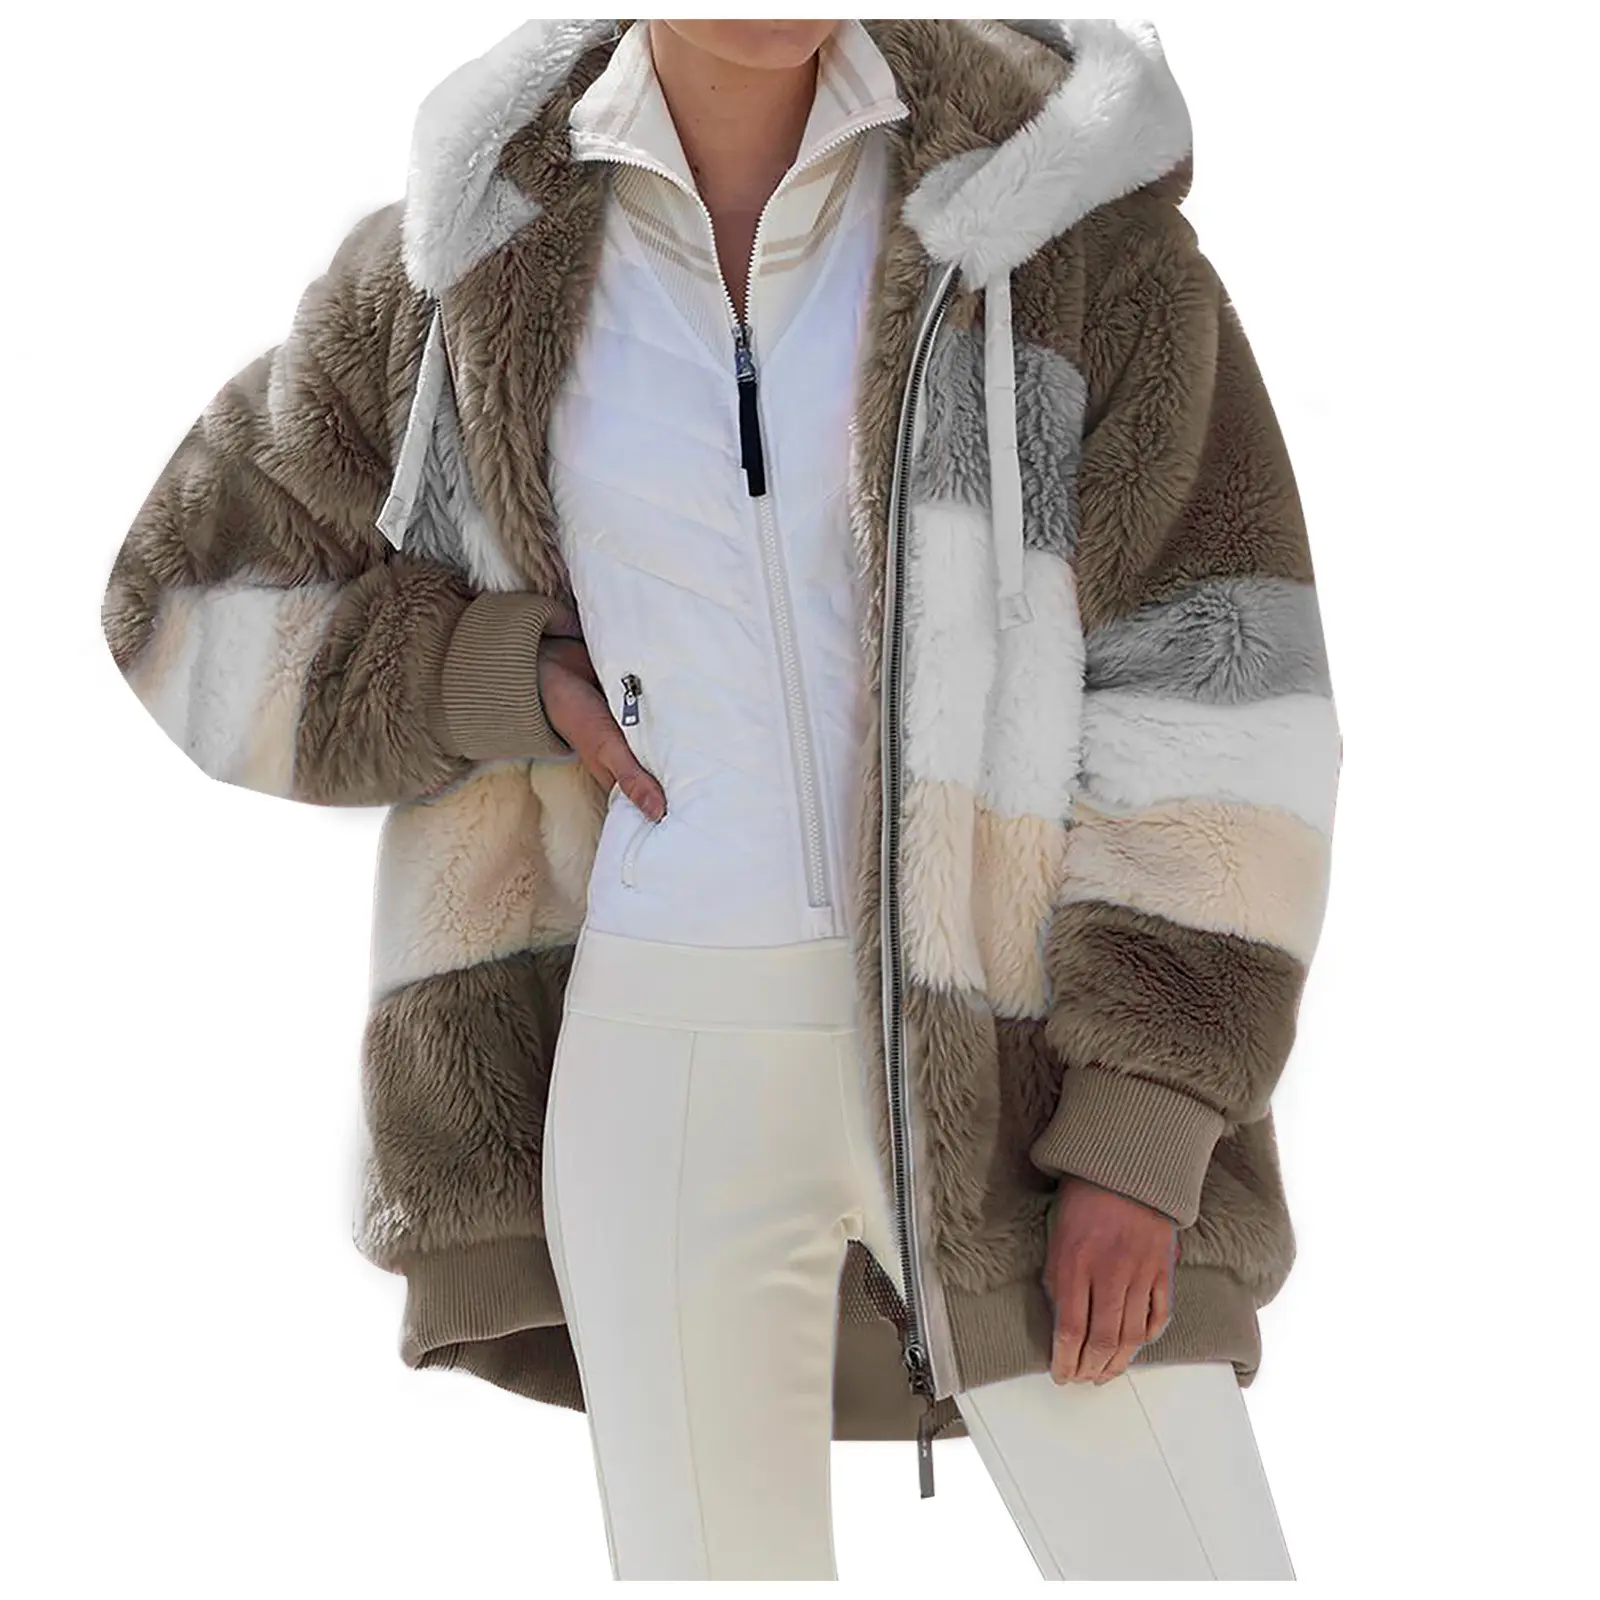 Womens Sherpa Jacket Casual Fleece Fuzzy Coat Long Winter Outwear Button Dwon Cardigan Plus Size Coats With Pockets.